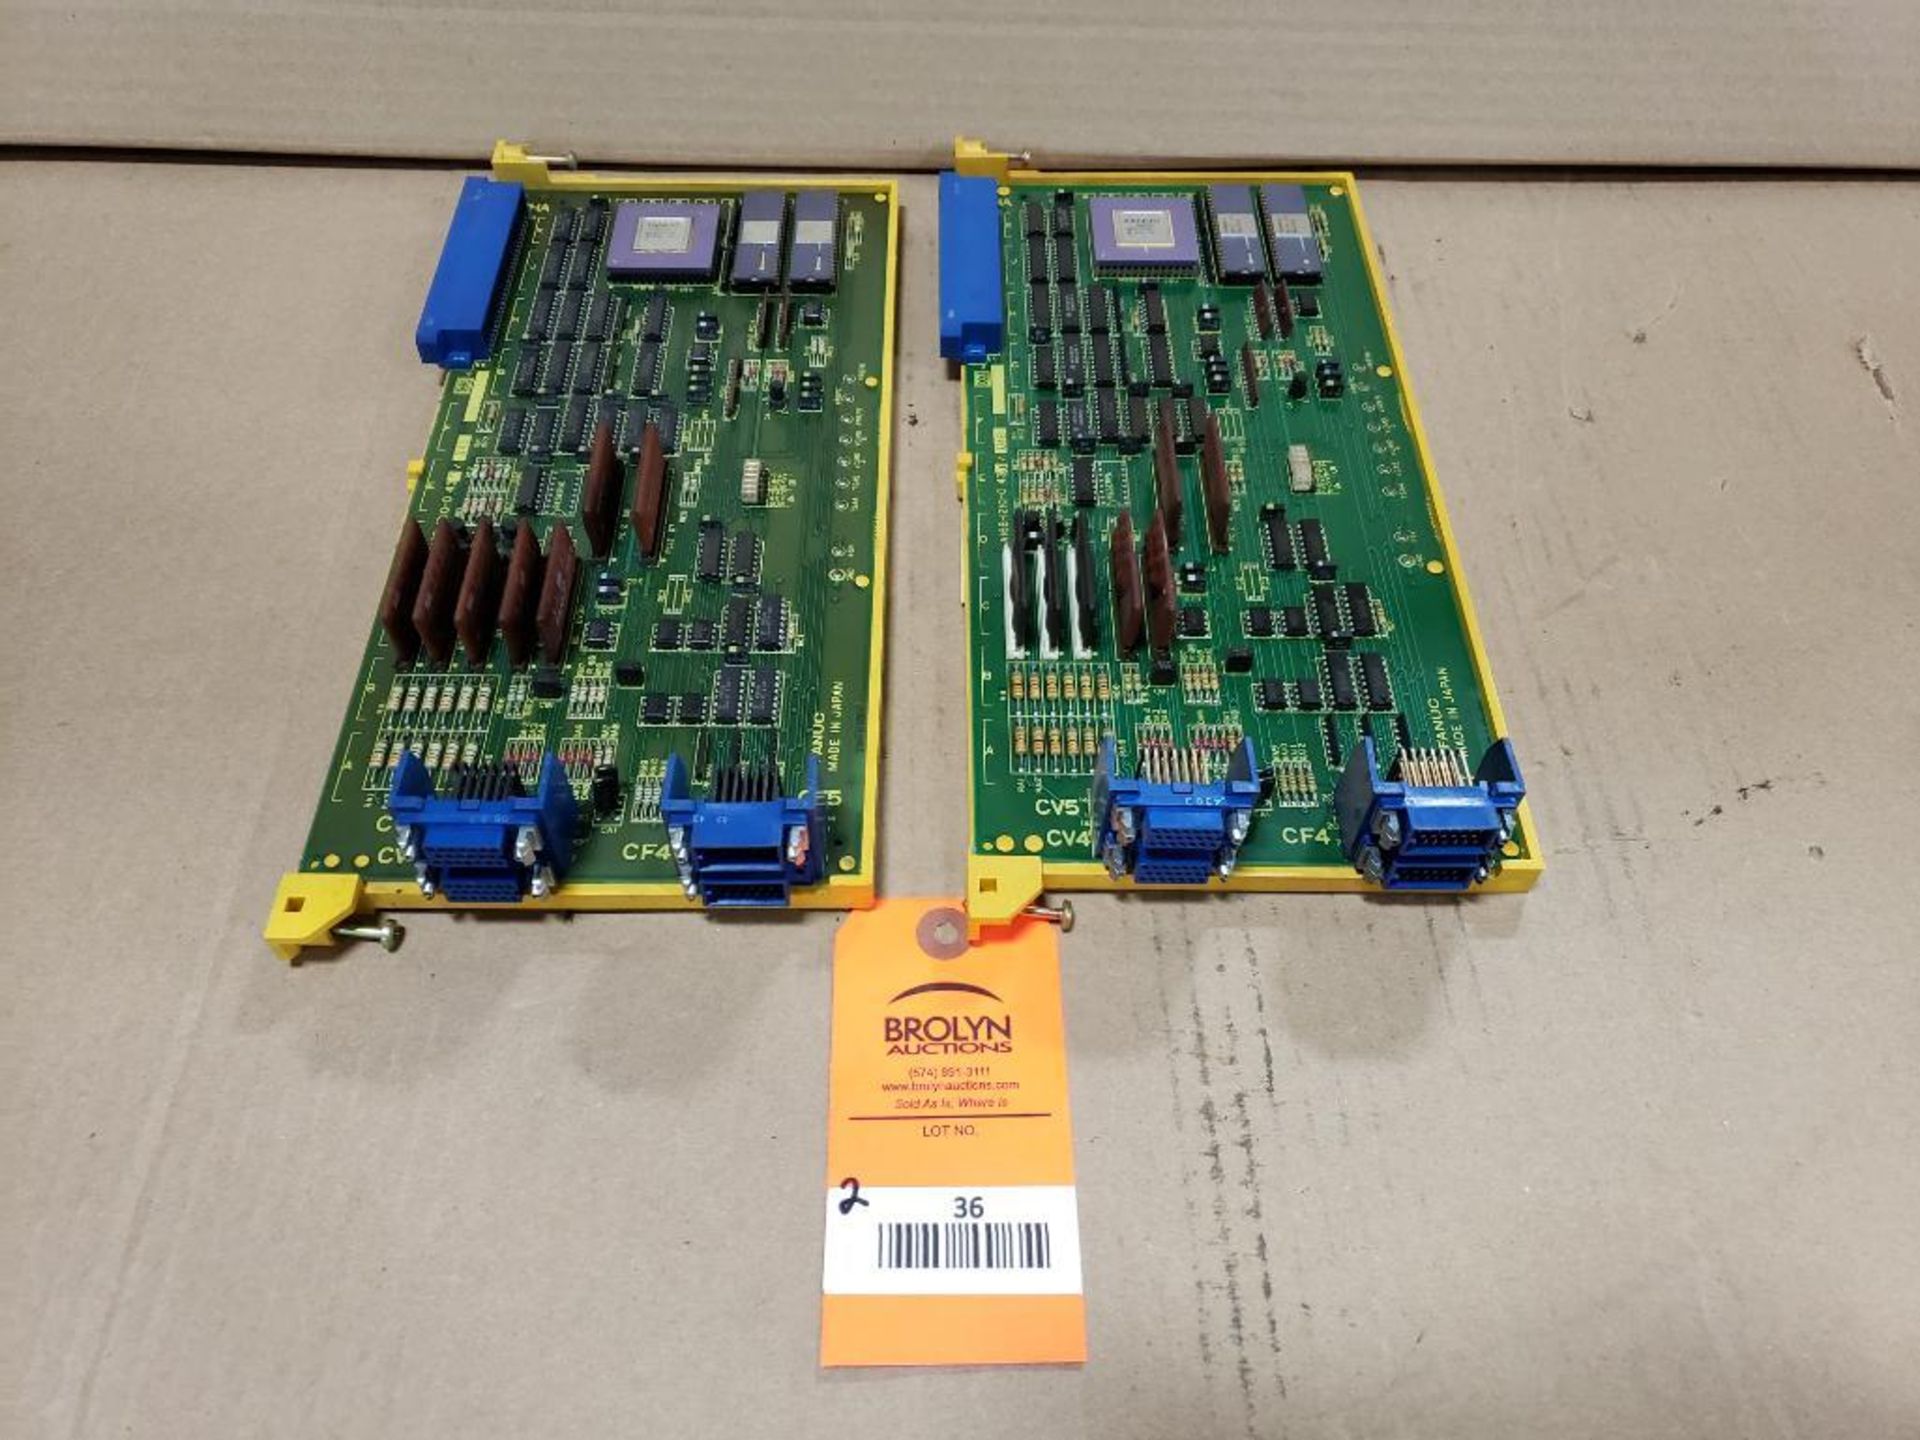 Qty 2 - Assorted Fanuc control boards.